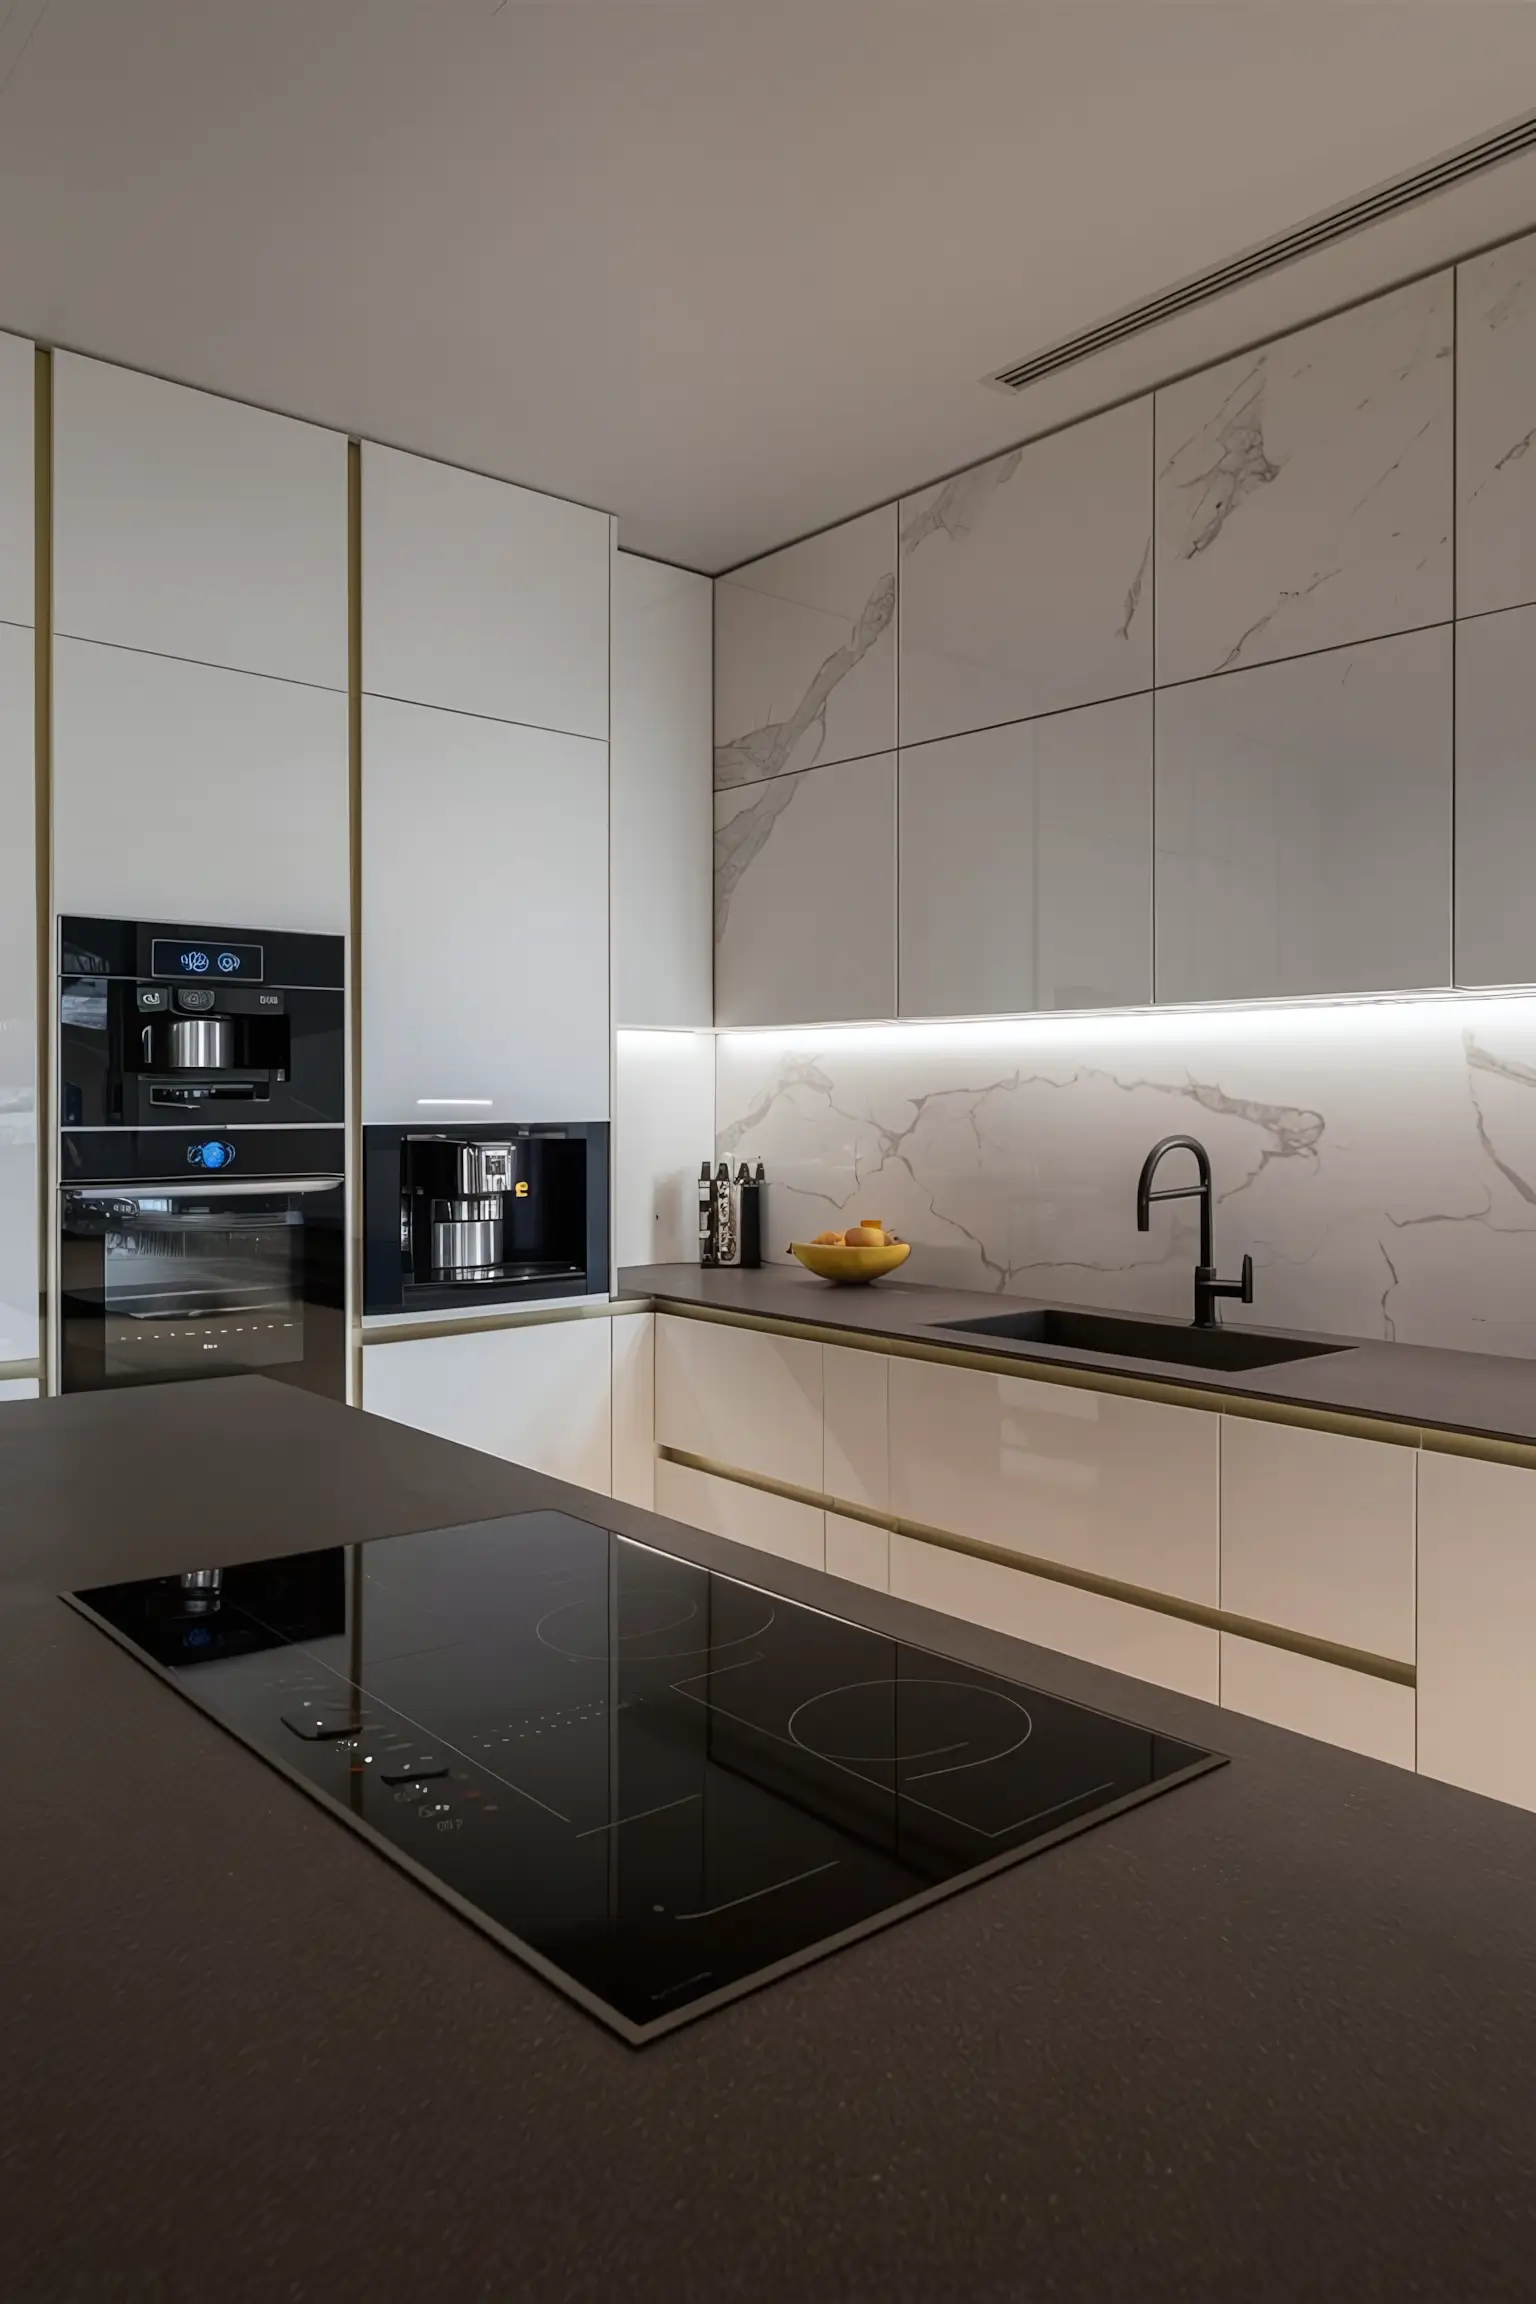 Modern kitchen with minimalist design elements, high-tech appliances, and sleek finishes.